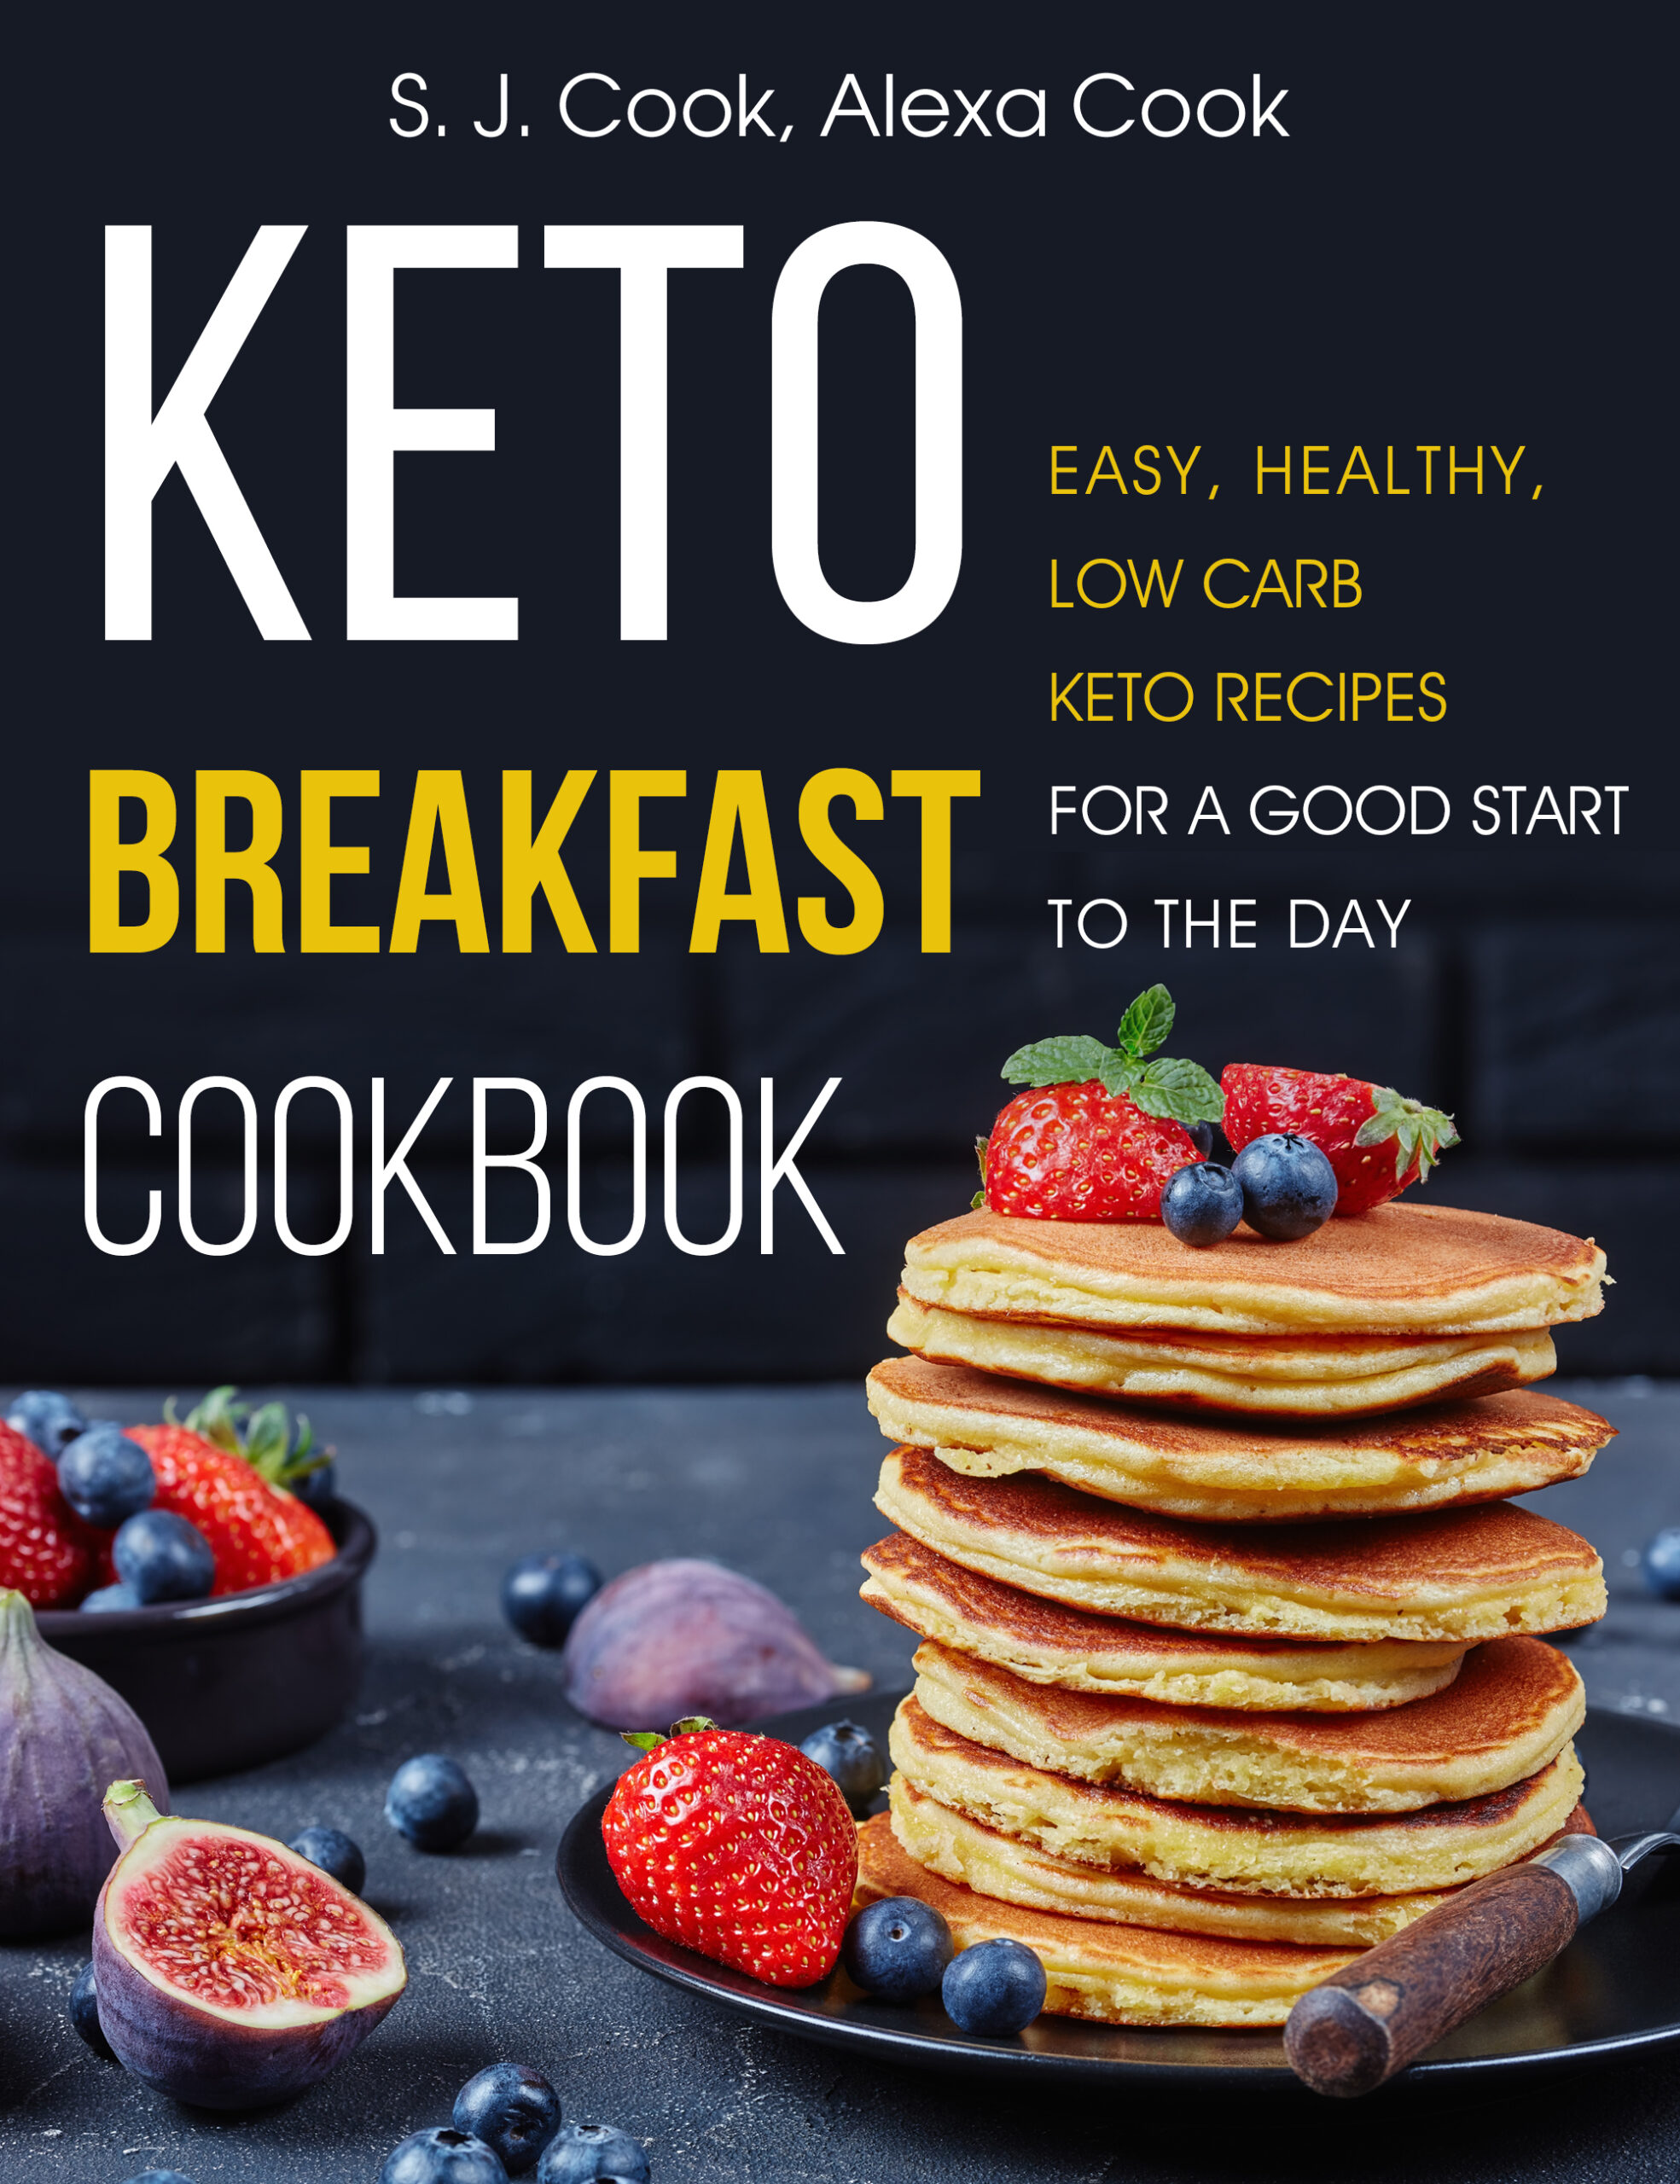 FREE: Keto Breakfast Cookbook by S.J. Cook